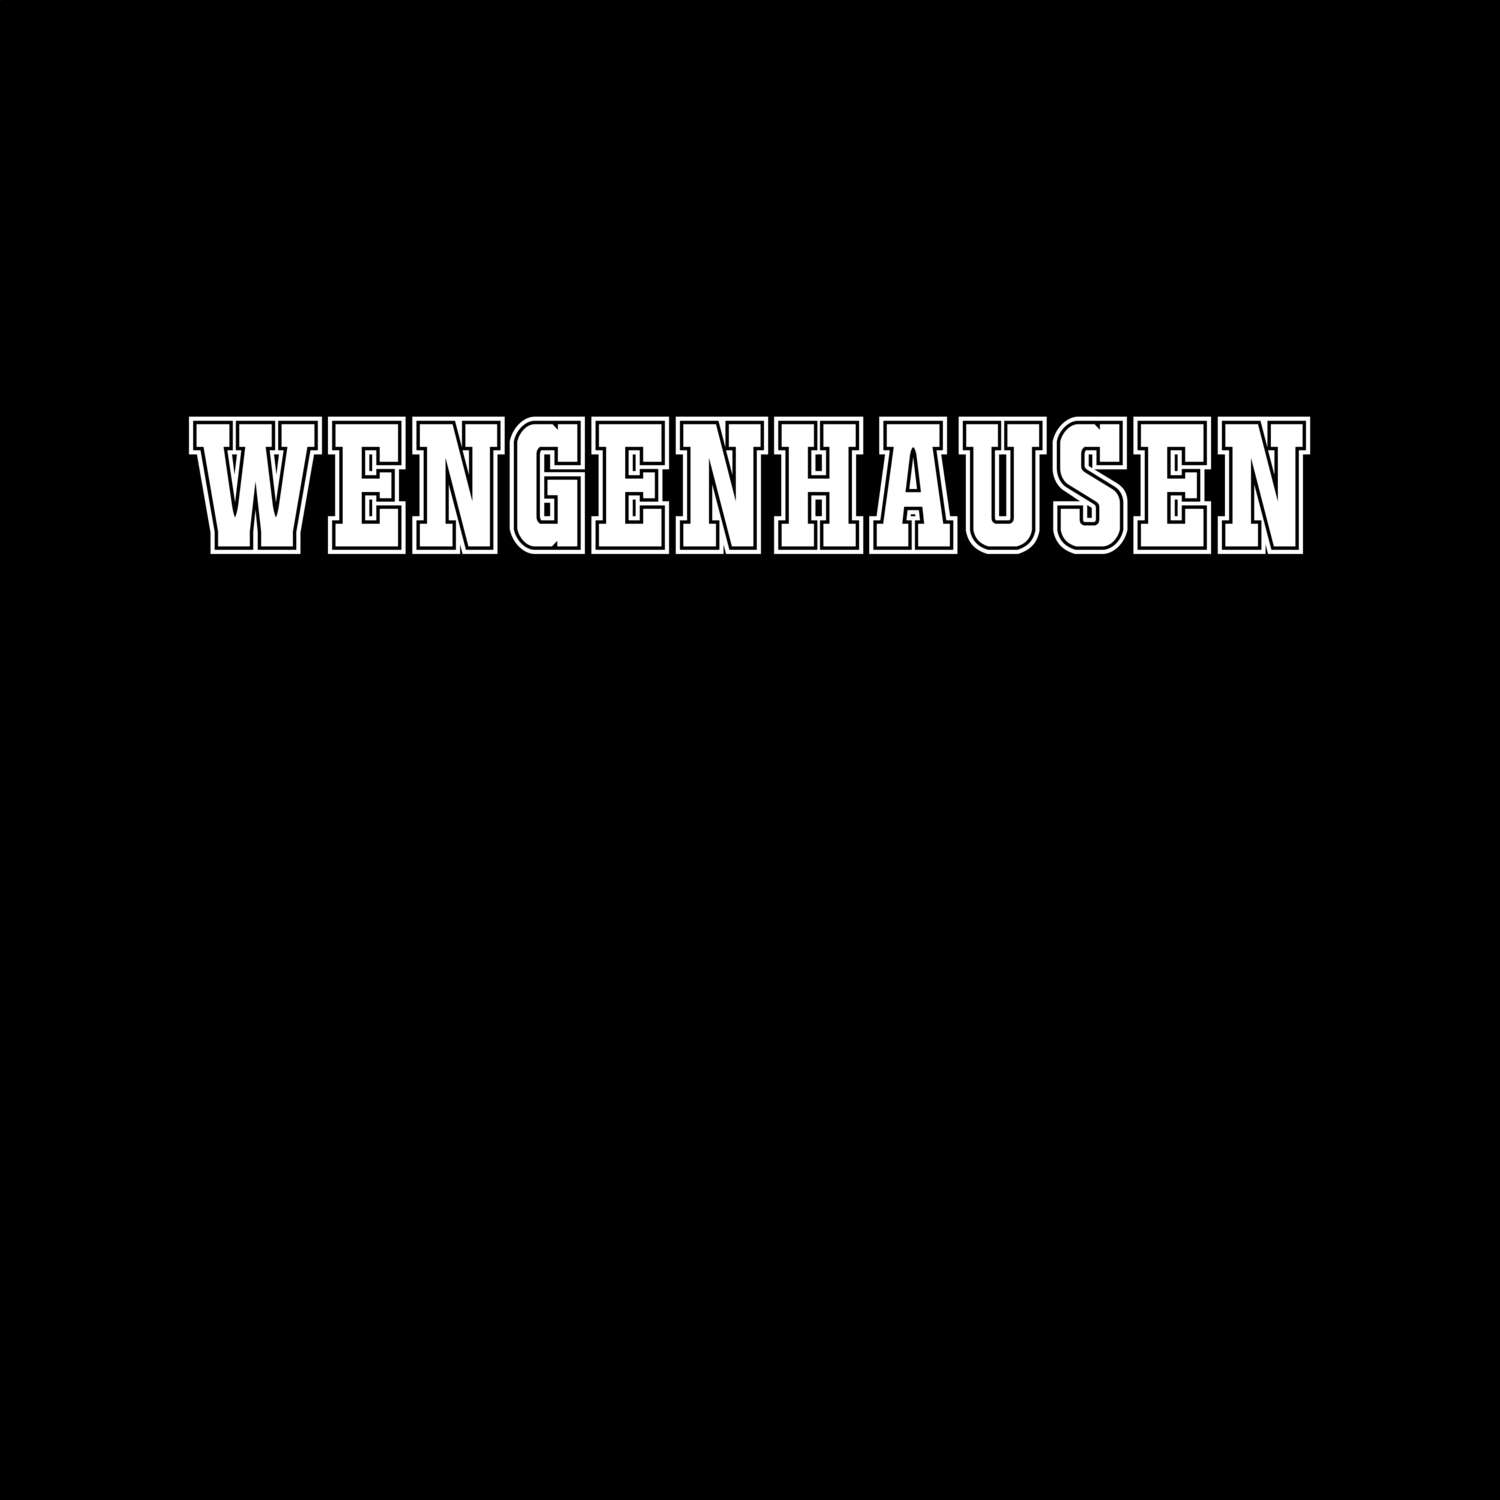 Wengenhausen T-Shirt »Classic«